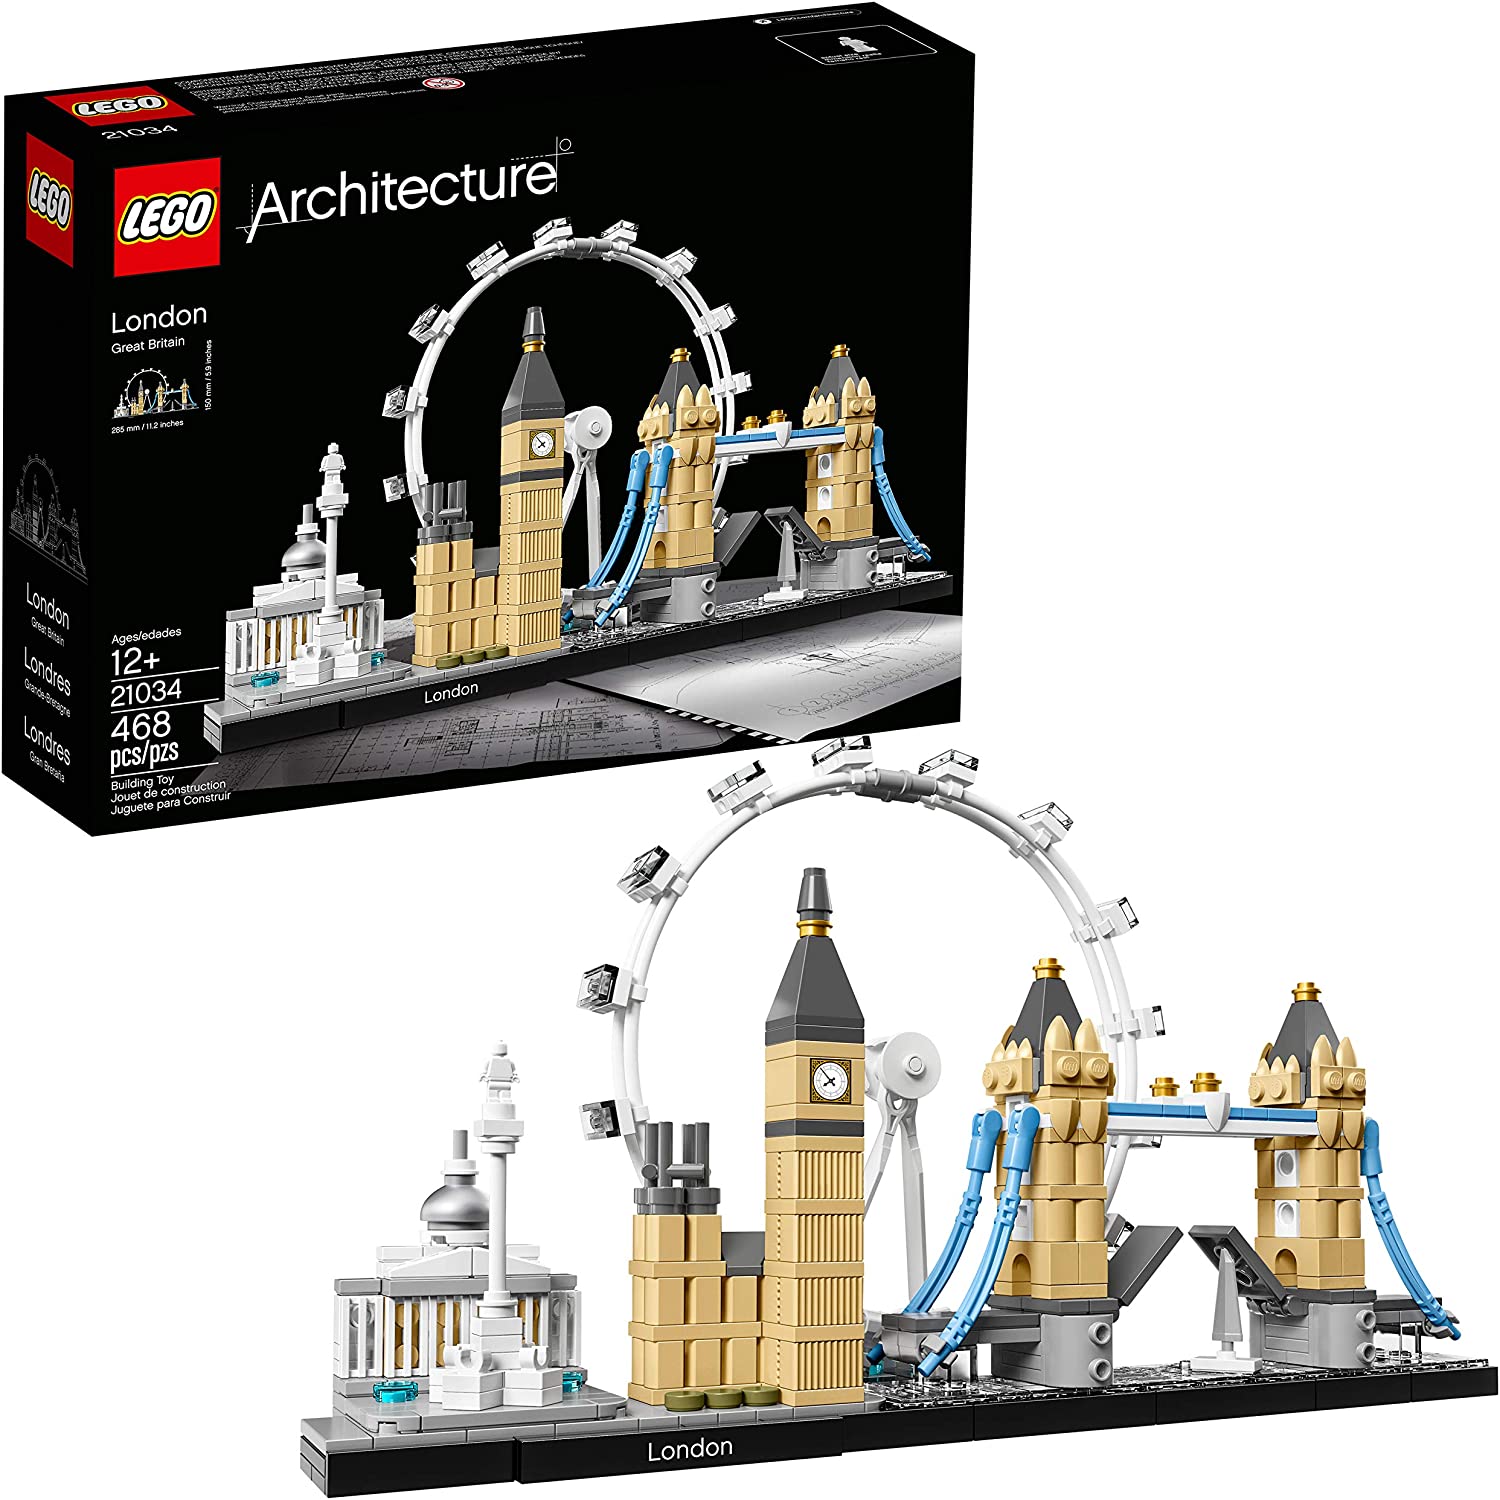 LEGO Architecture London Skyline Building Set $32 + Free Shipping